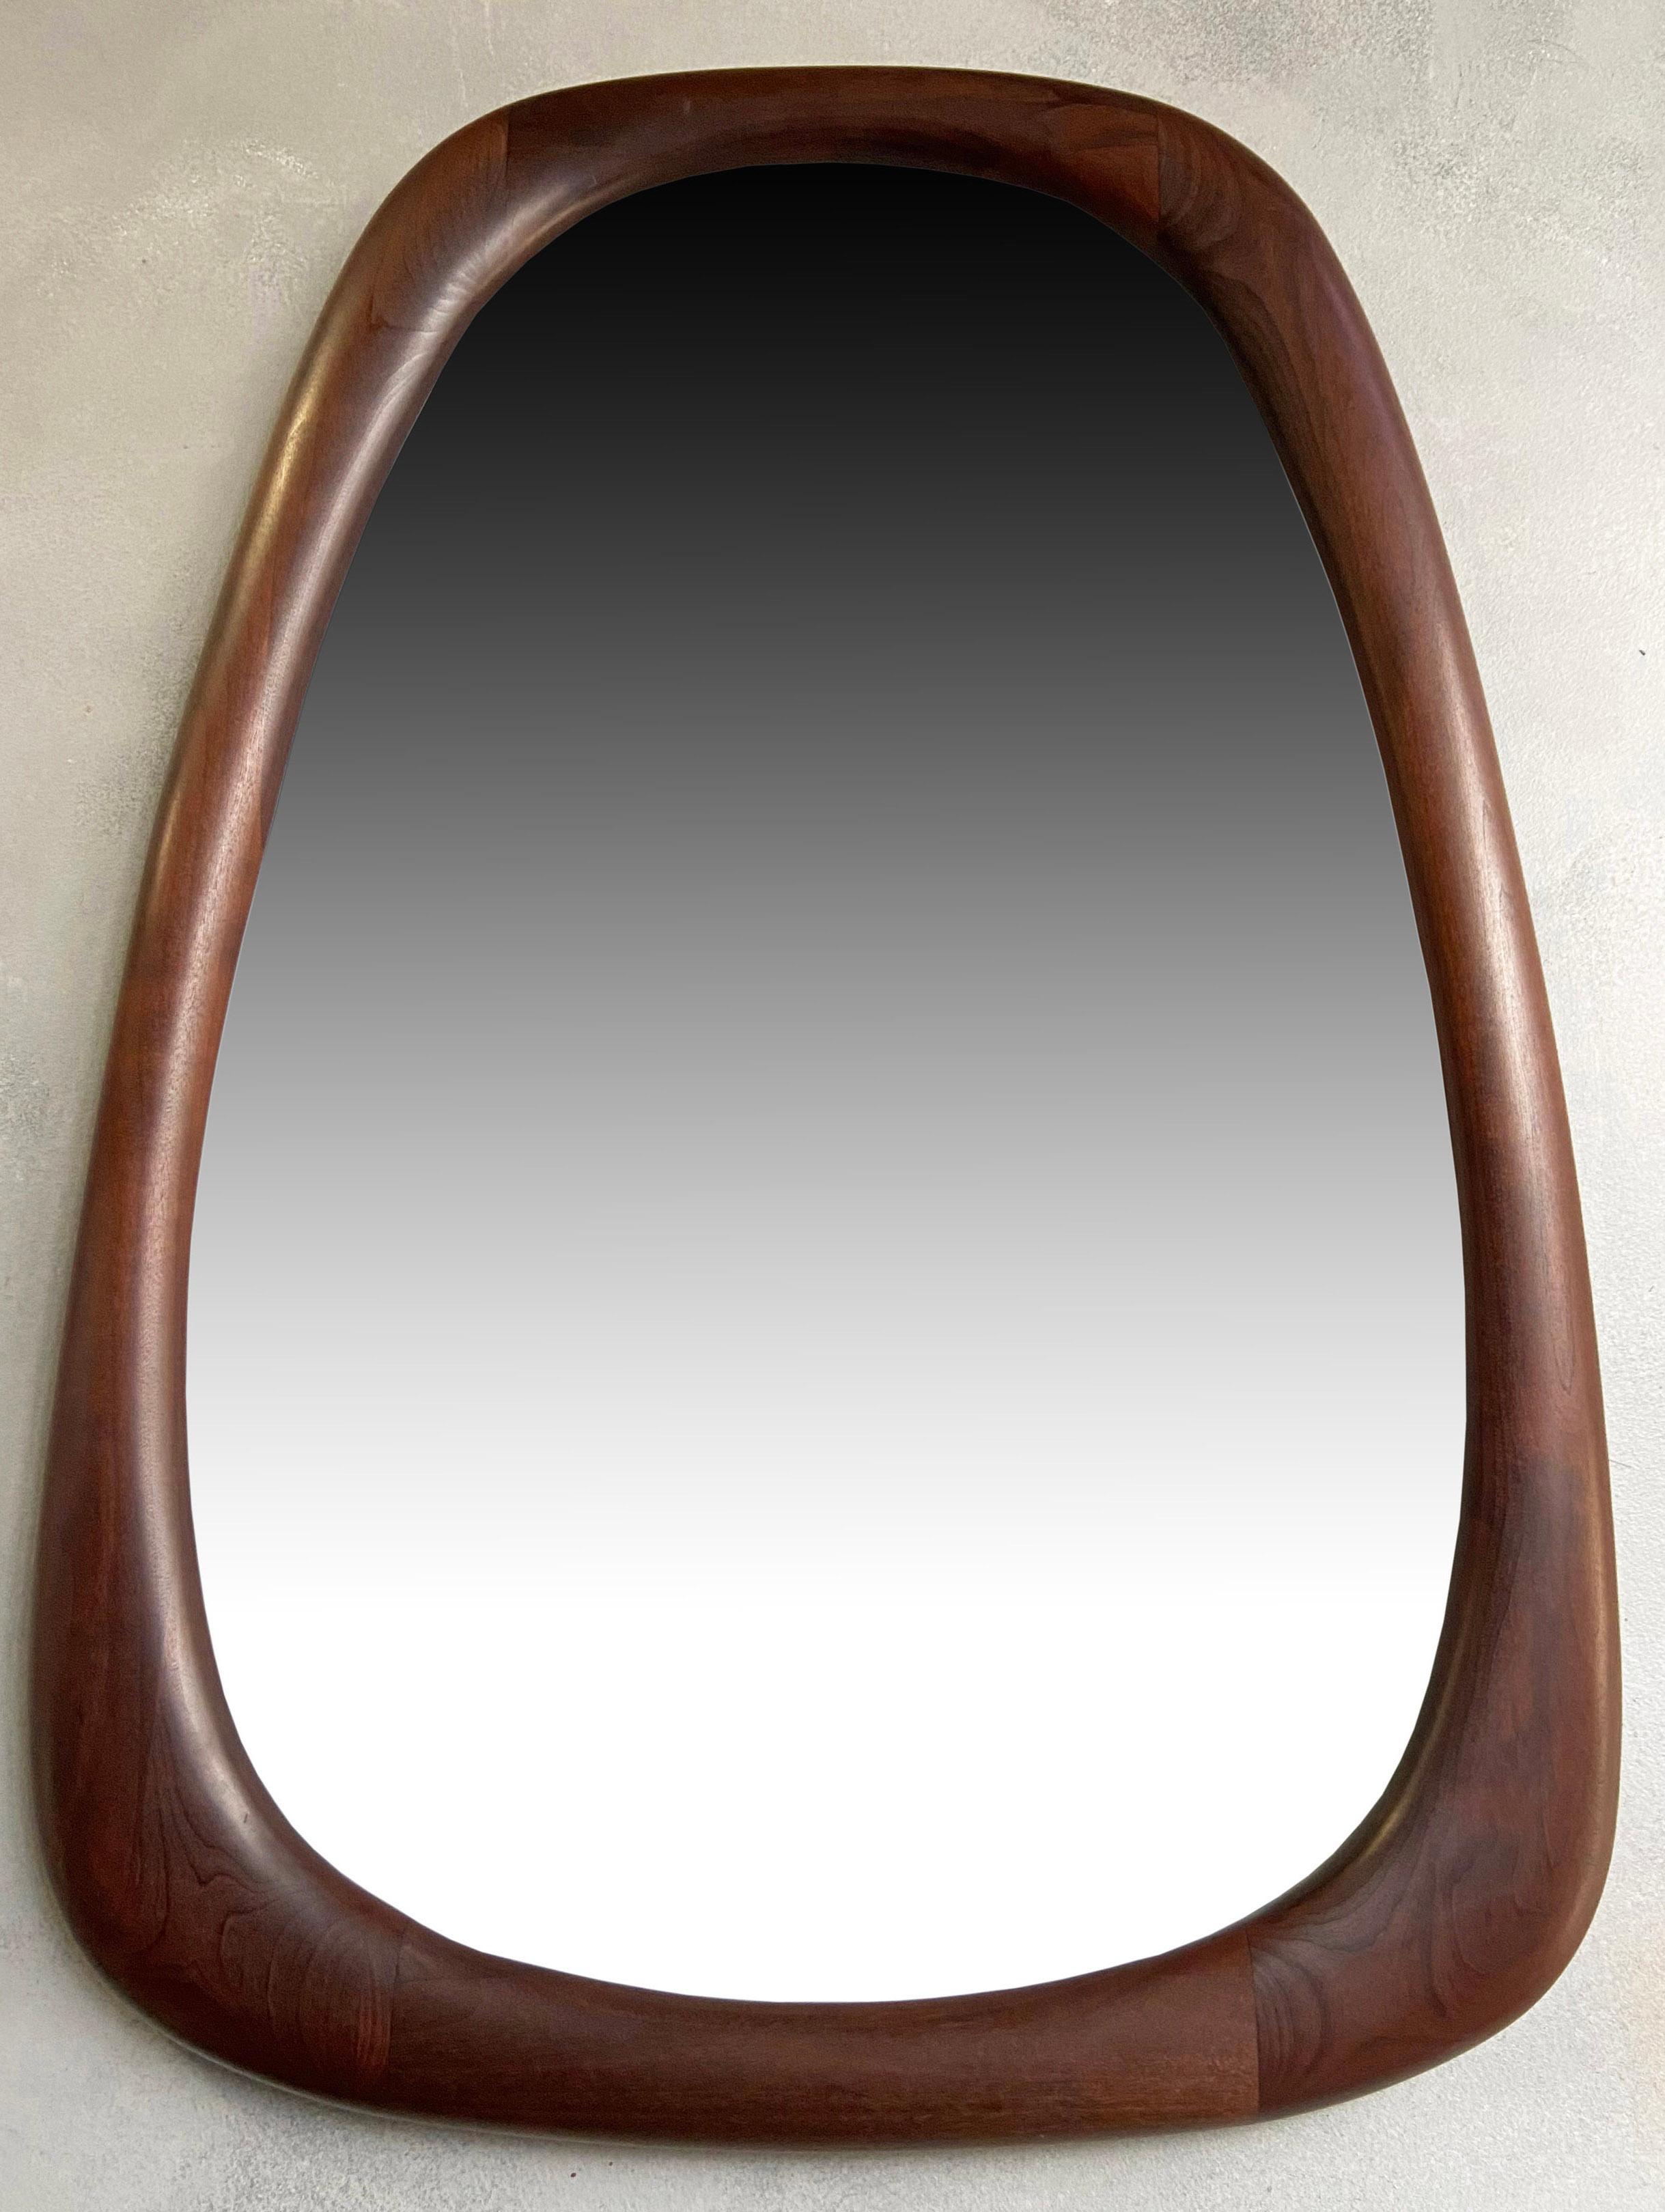 Stunning Mid-Century American Modern Craft Mirror by Dean Santner For Sale 2